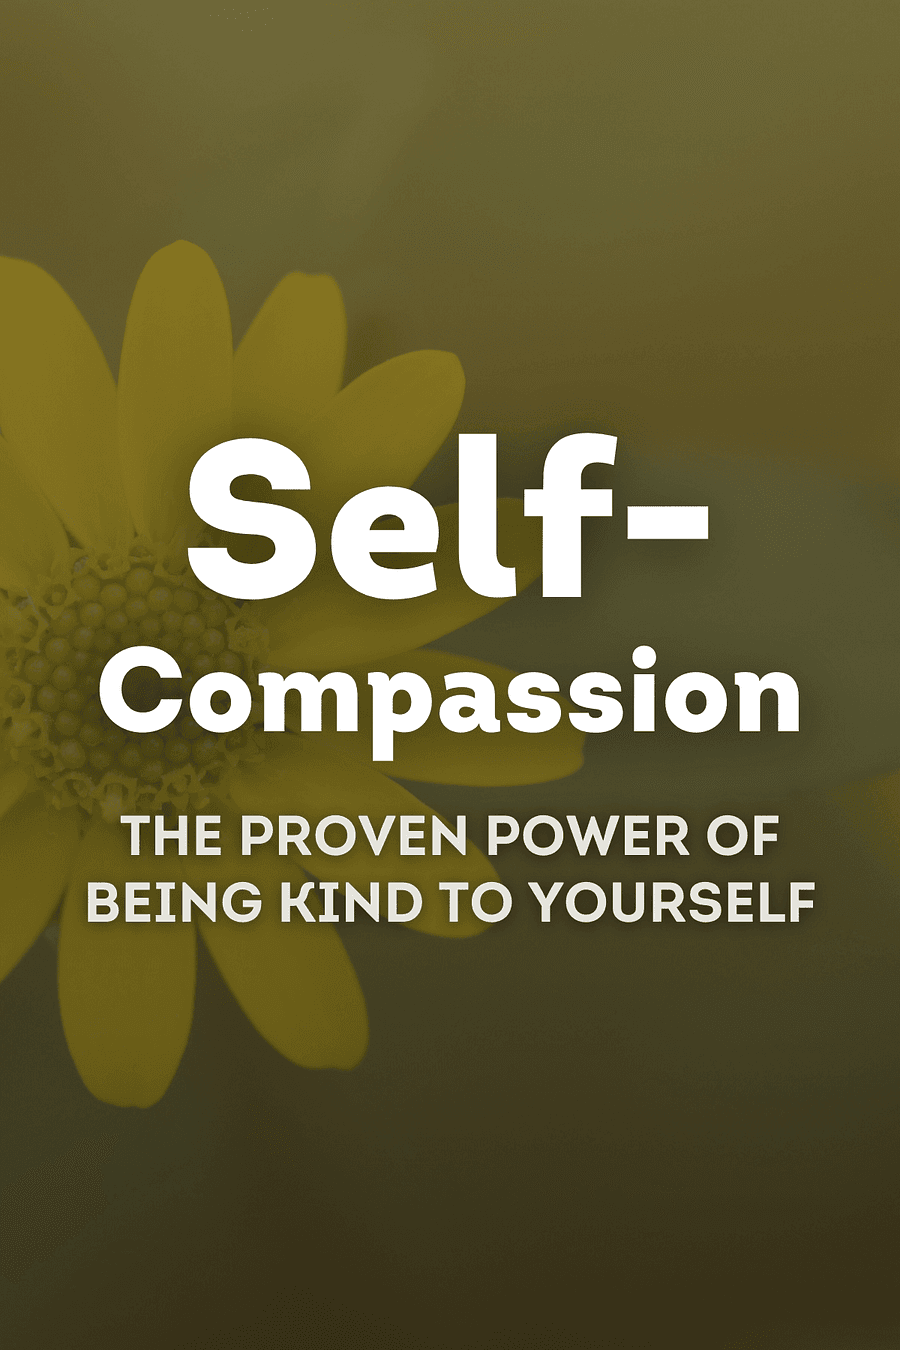 Self-Compassion by Kristin Neff - Book Summary